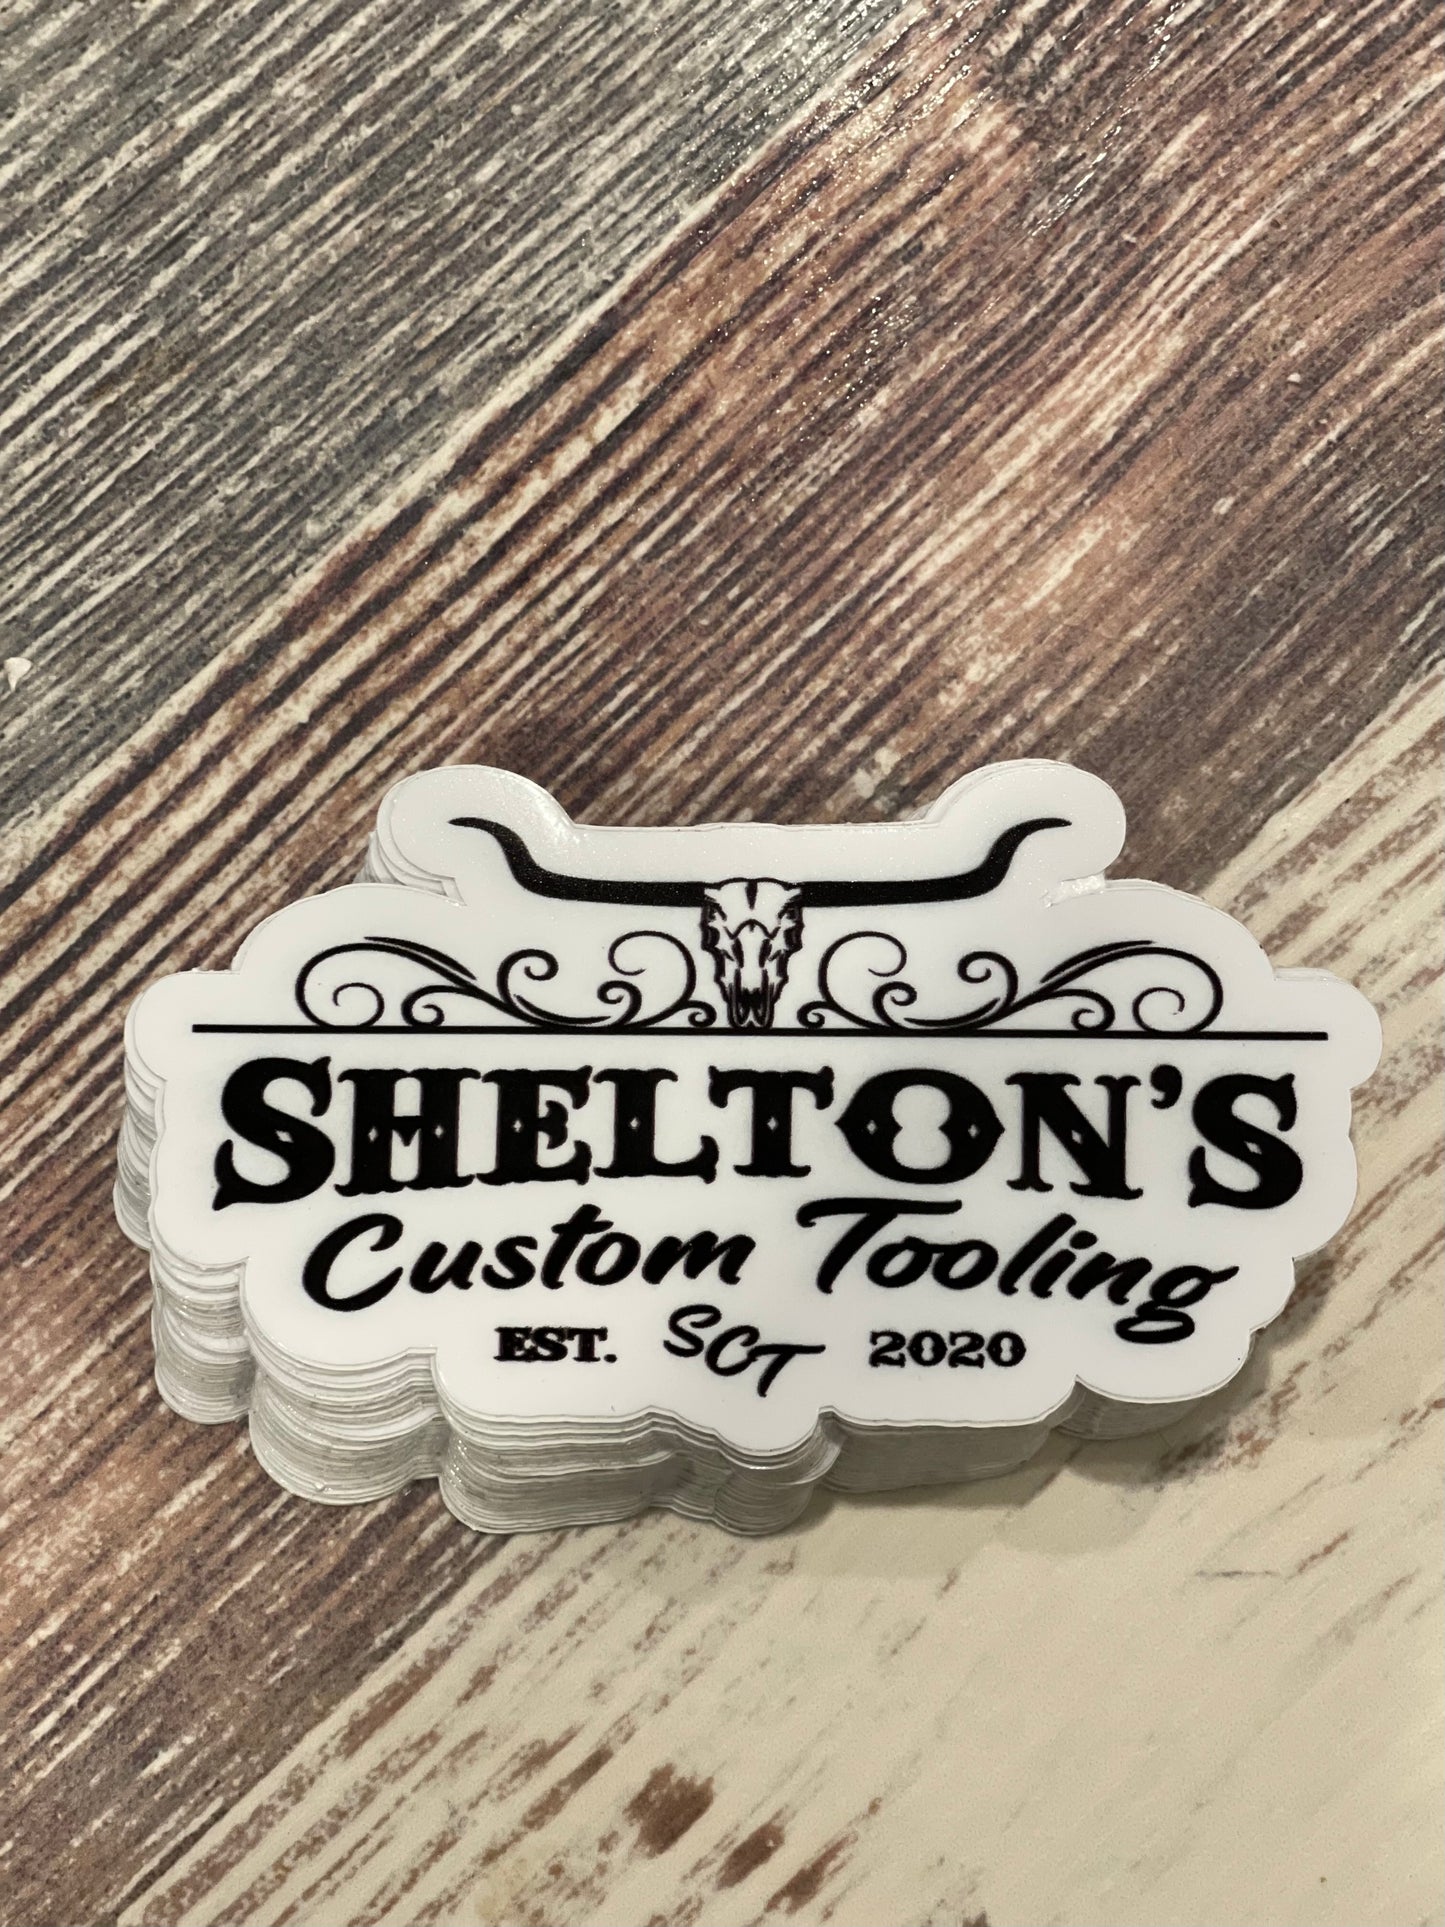 Sheltons custom tooling stickers